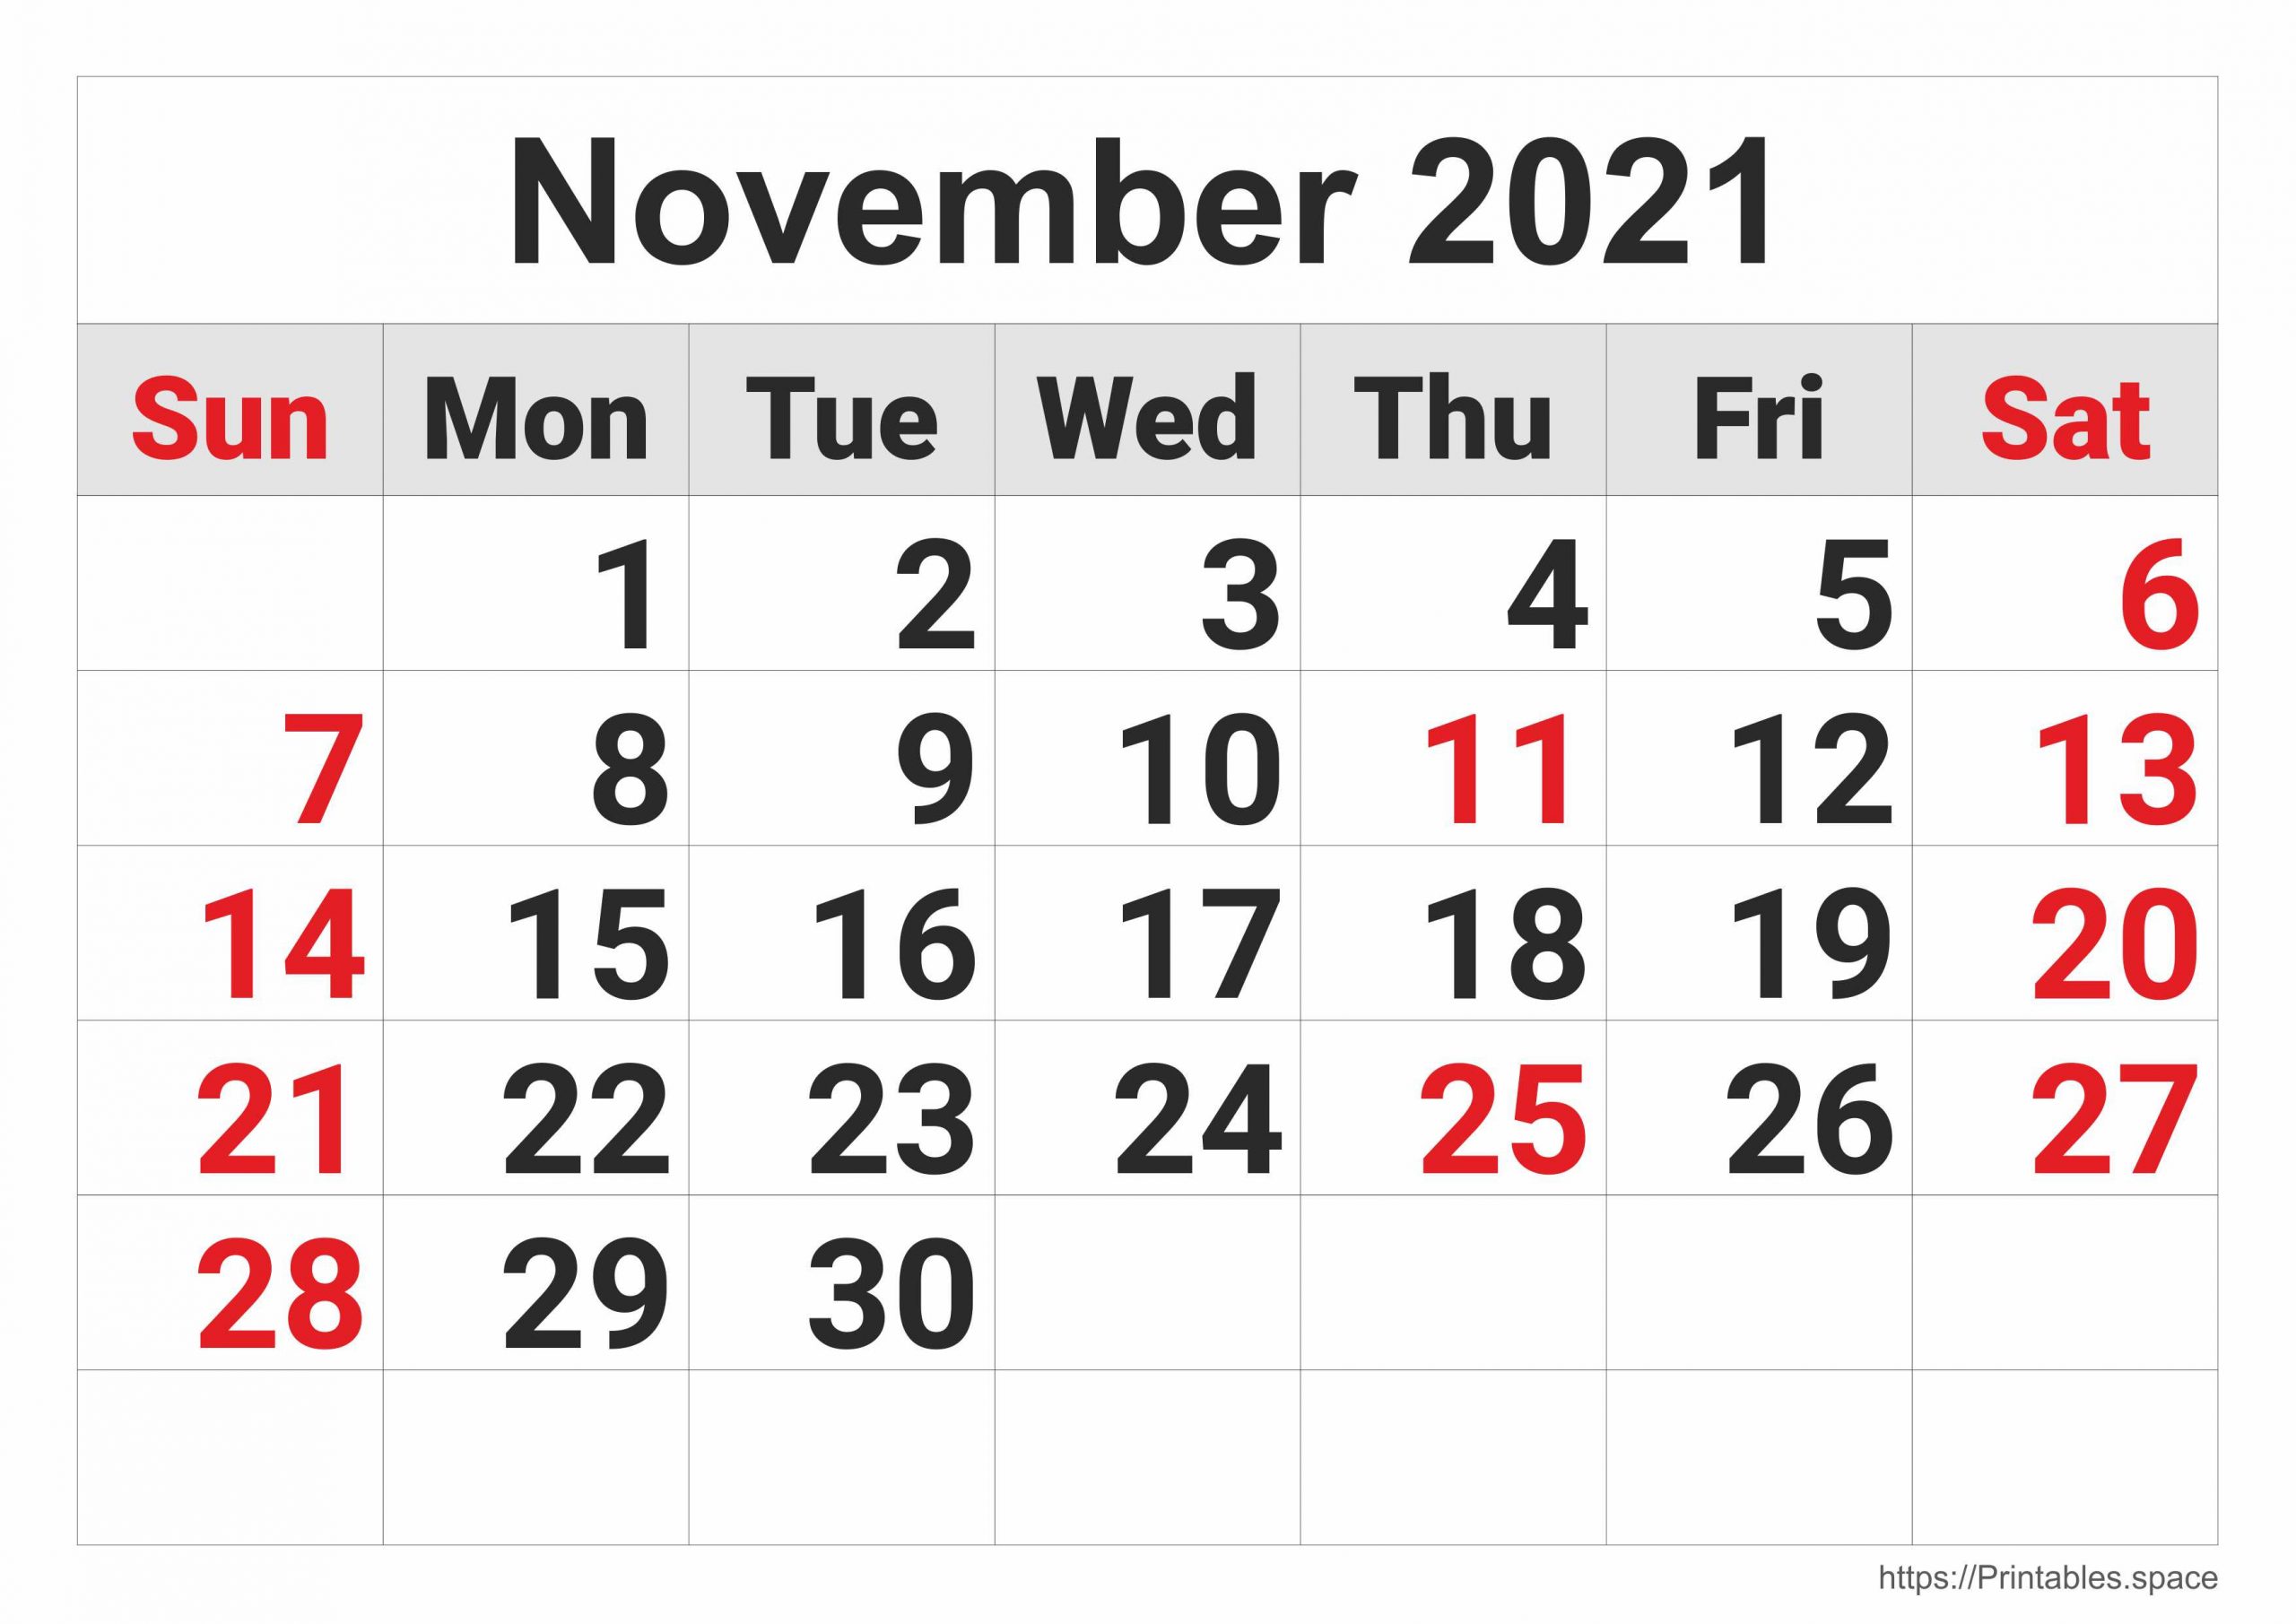 November 2021 Monthly Calendar - Free Printables November 2021 Monthly Calendar